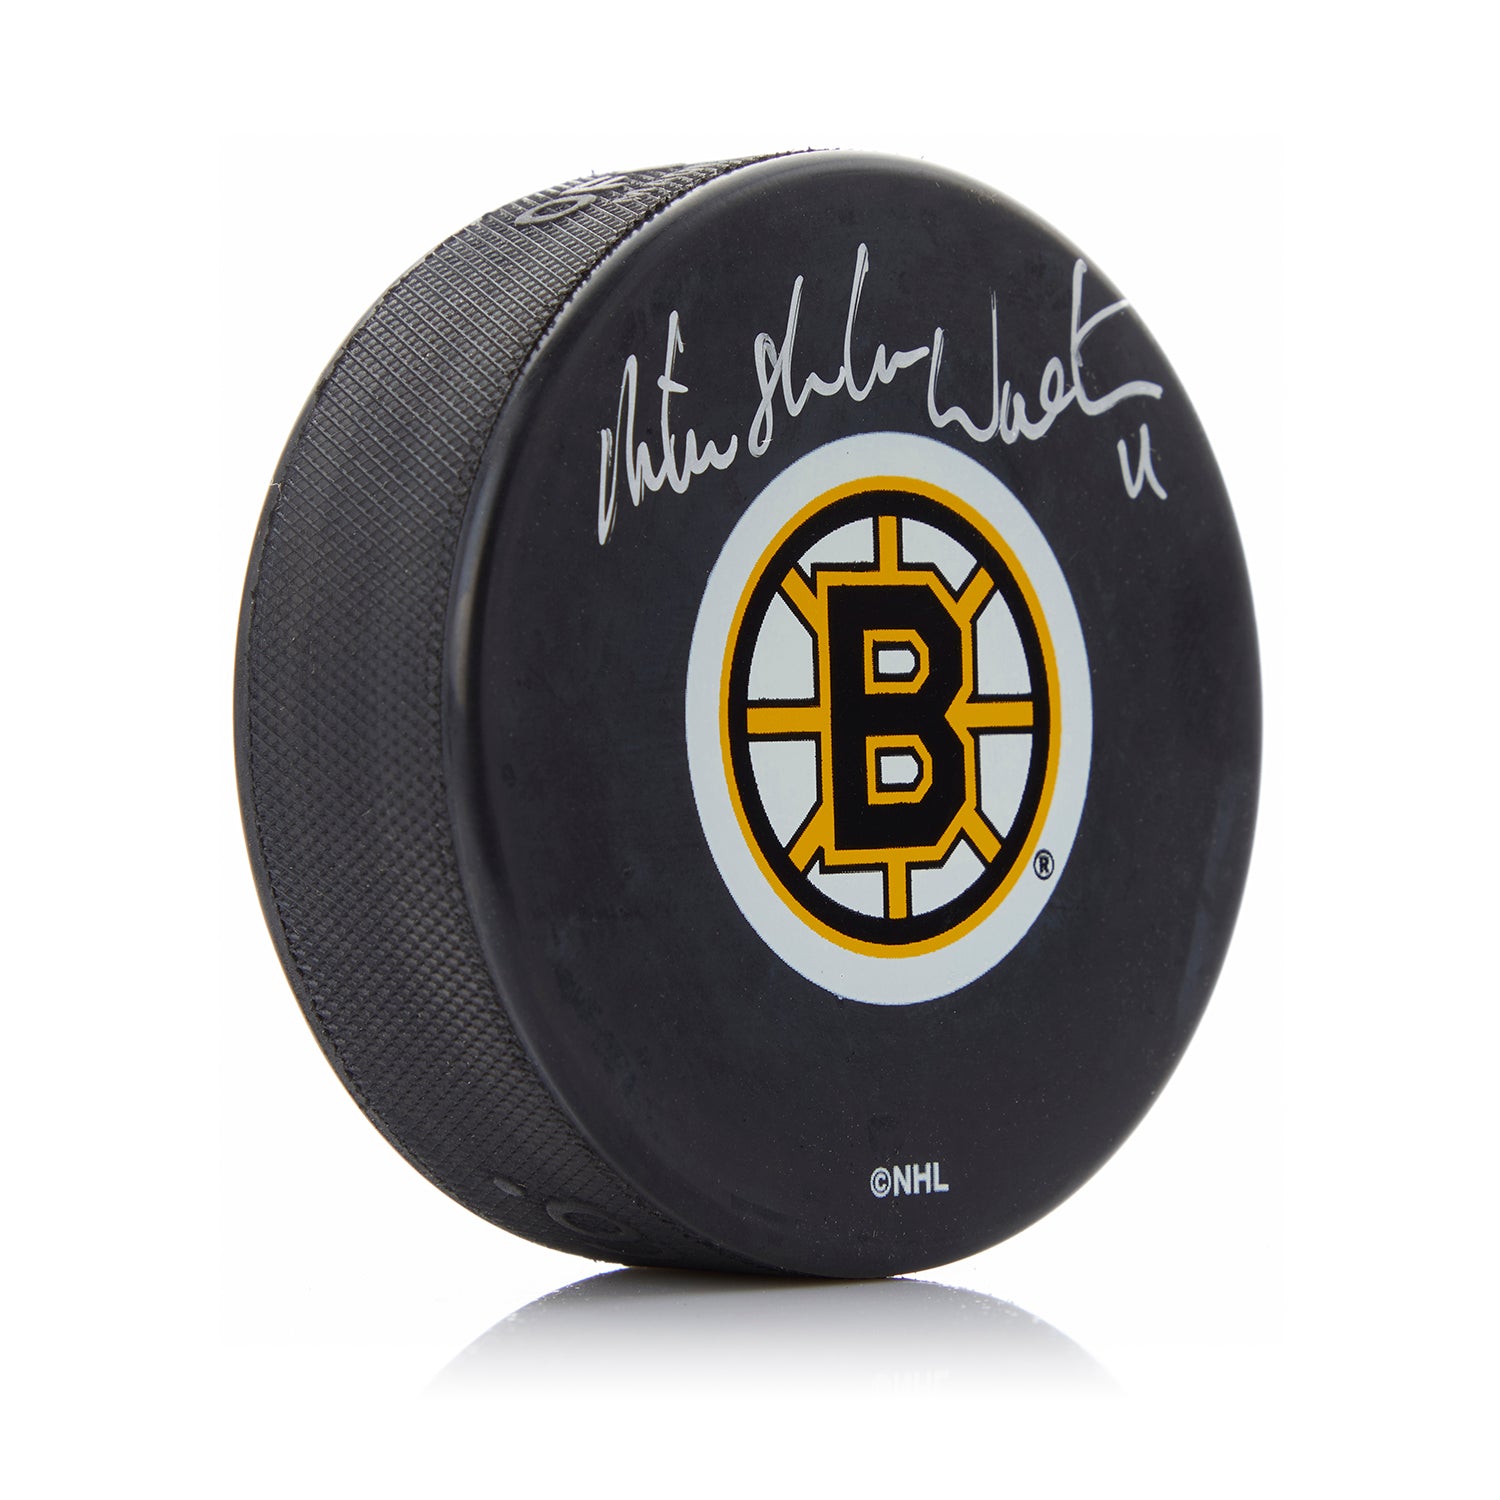 Mike Shaky Walton Autographed Boston Bruins Hockey Puck